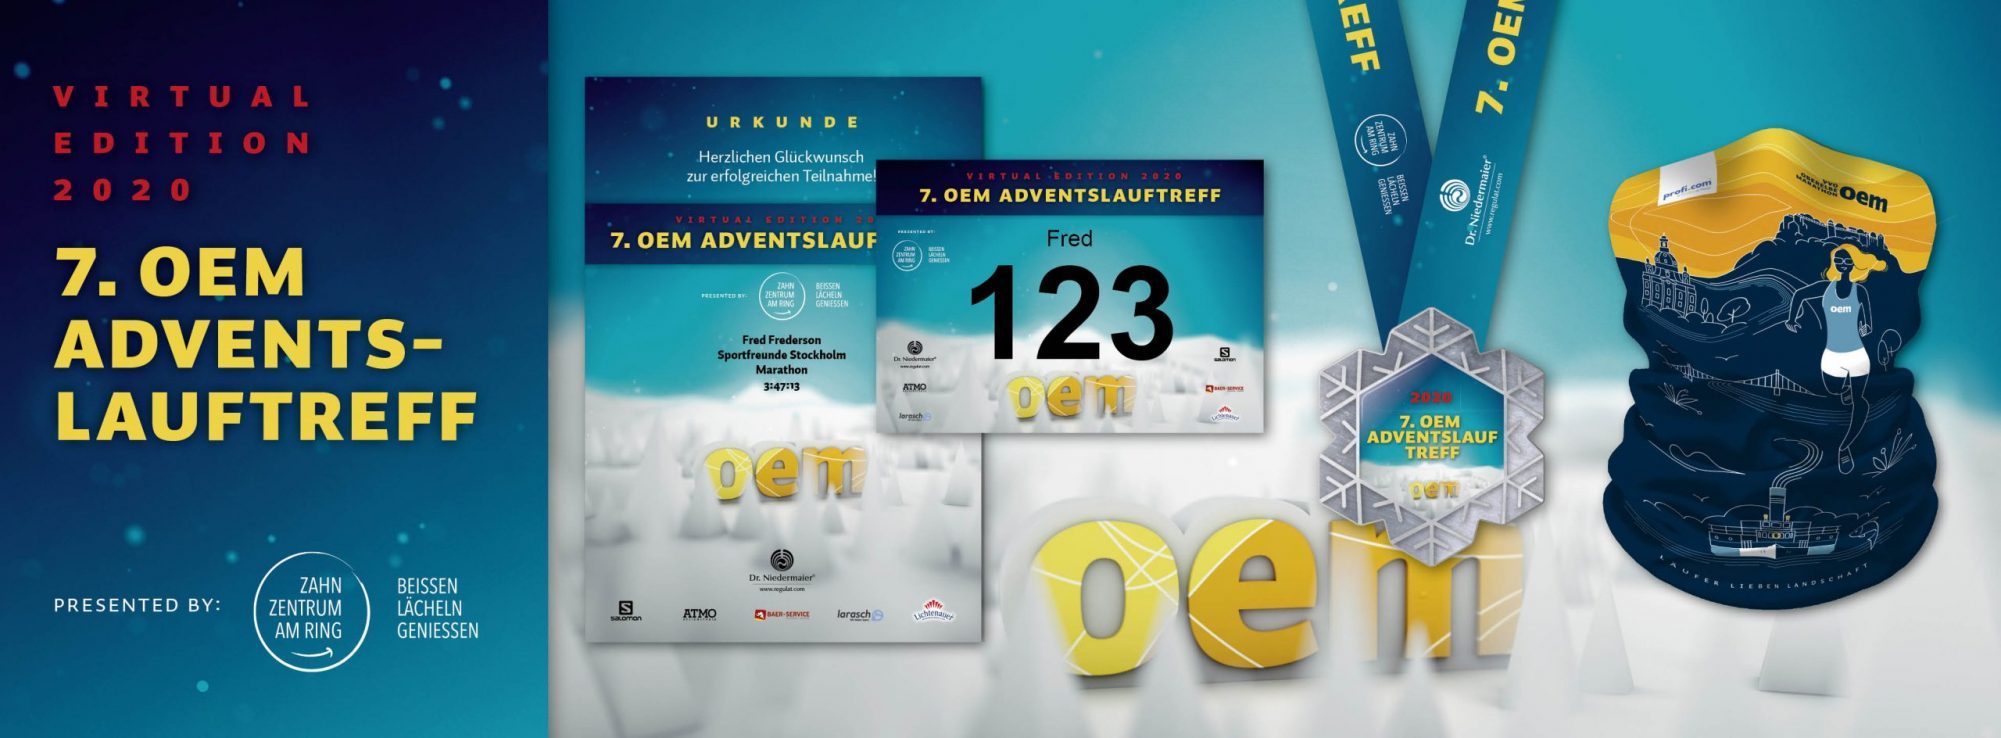 7. OEM-Adventslauftreff 2020 | Virtuell Edition